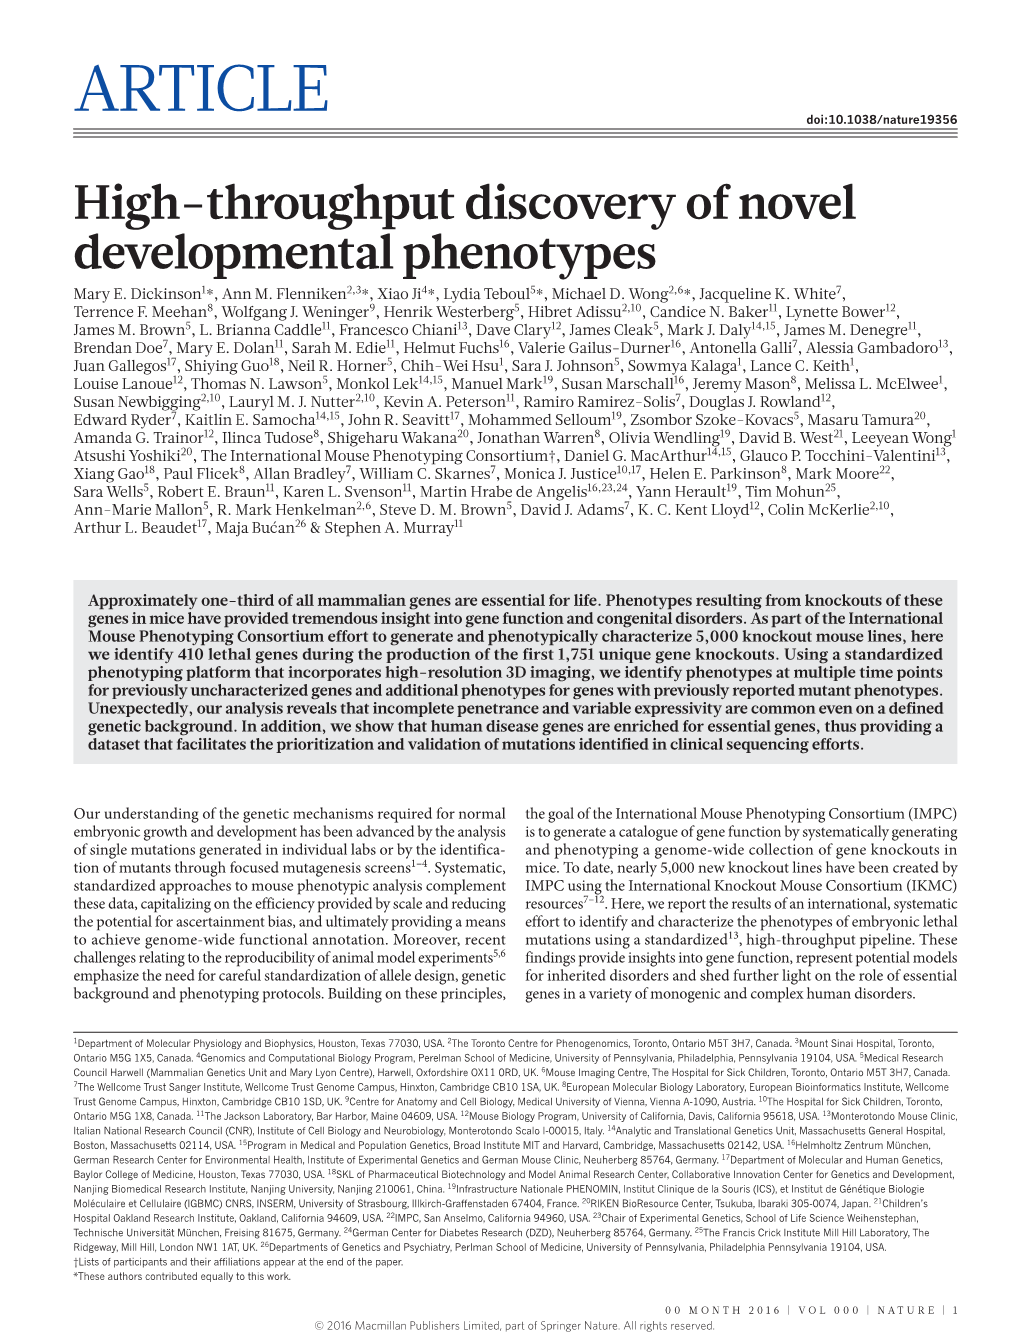 High-Throughput Discovery of Novel Developmental Phenotypes Mary E